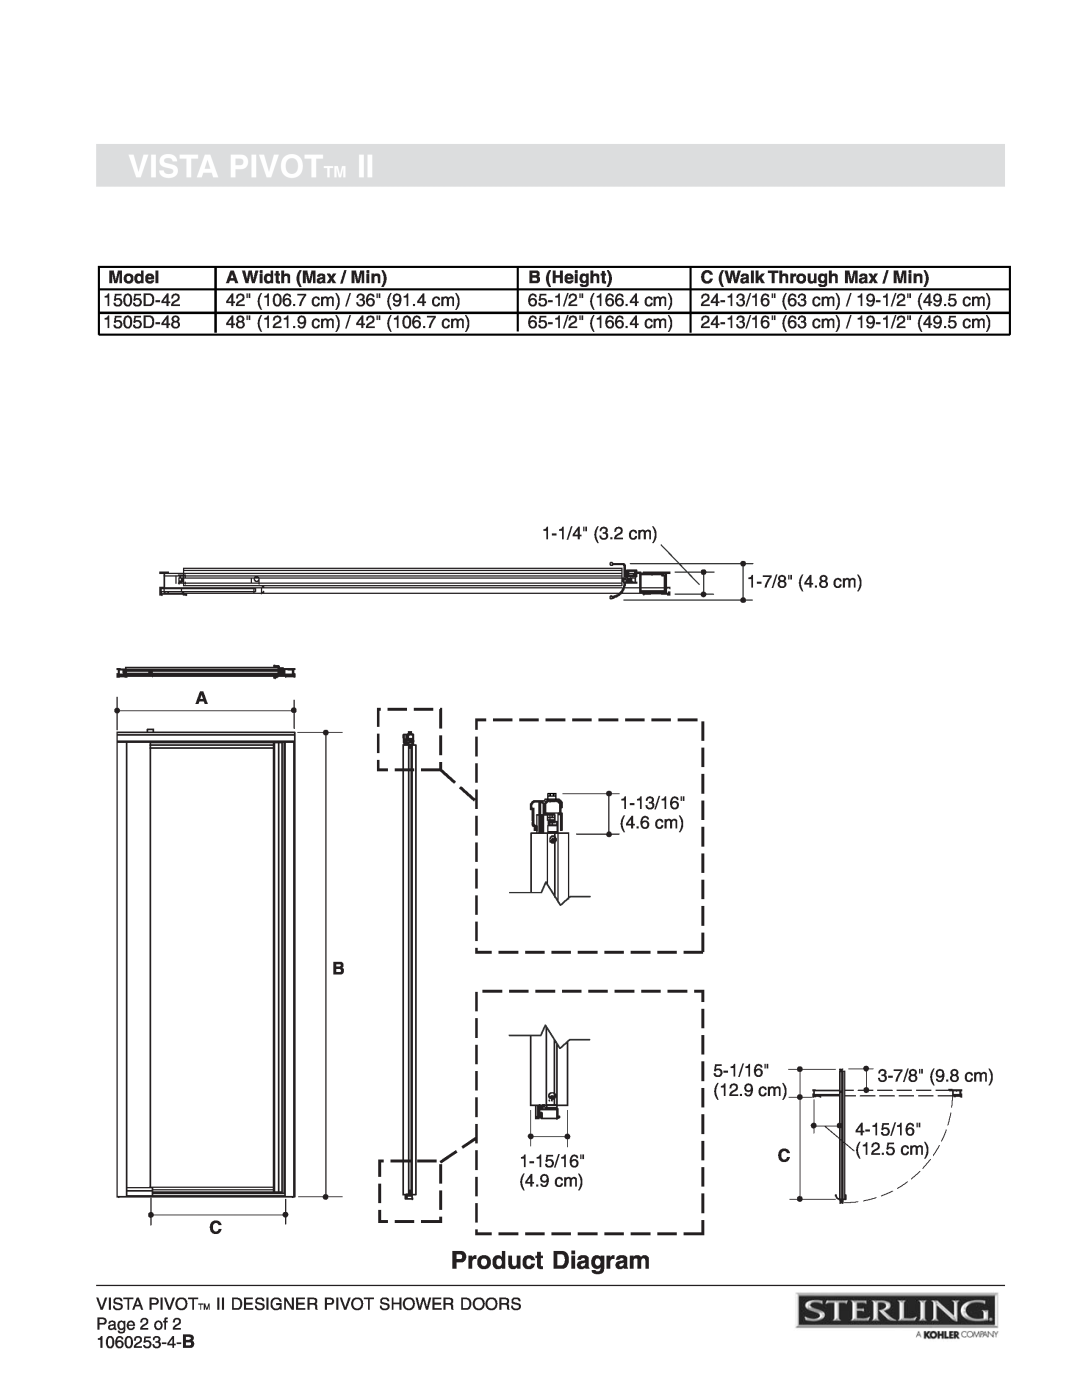 Sterling Plumbing 1505D-42 Product Diagram, Vista Pivottm, Model, A Width Max / Min, B Height, C Walk Through Max / Min 